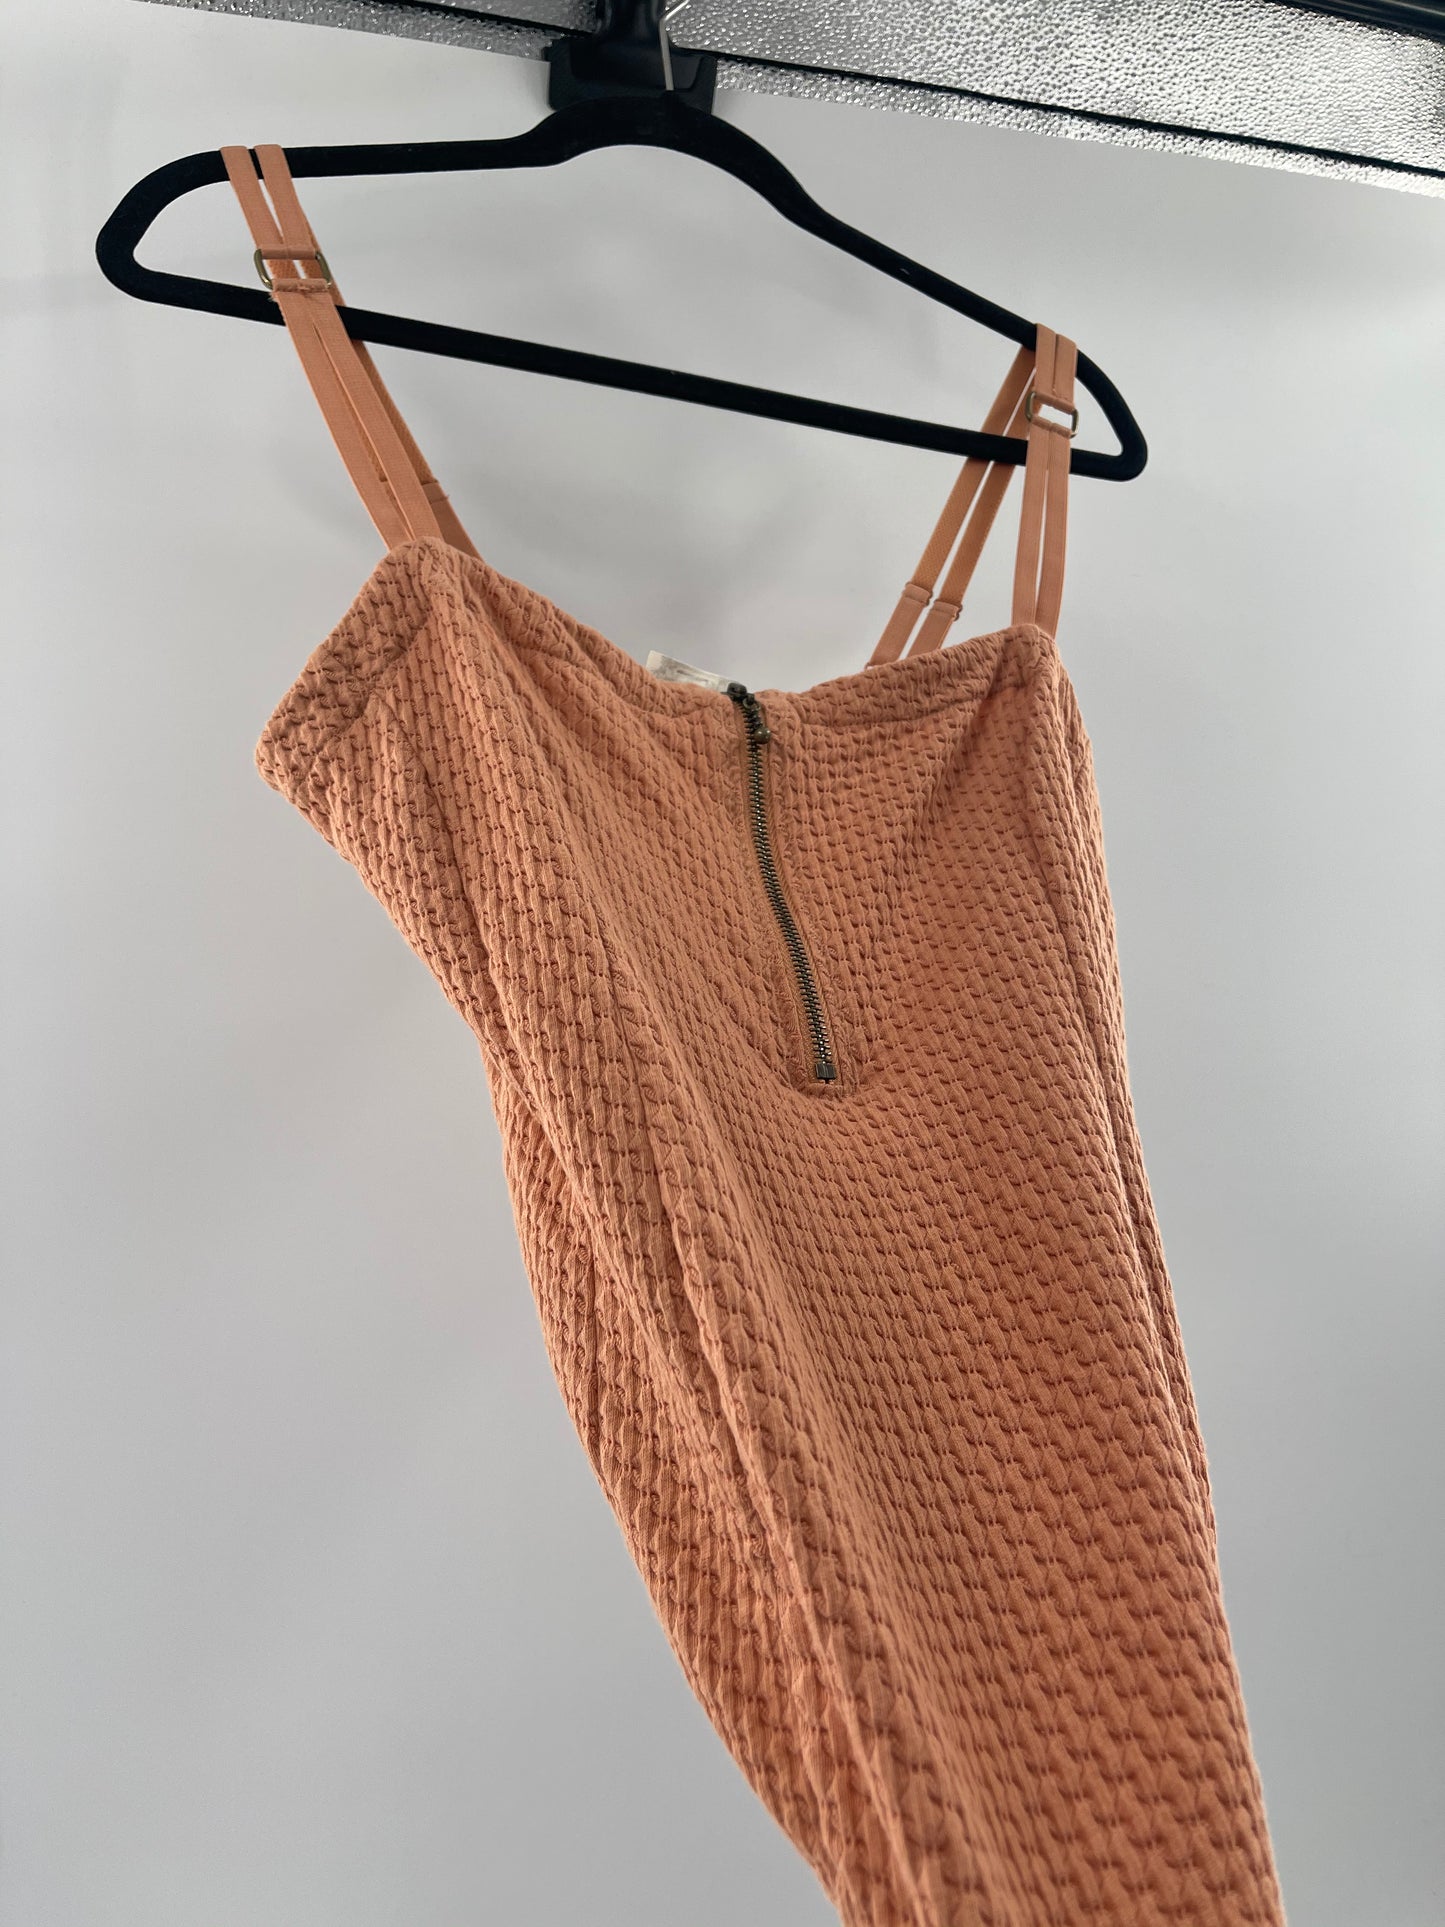 Intimately Free People Salmon Knit Bodysuit (L)